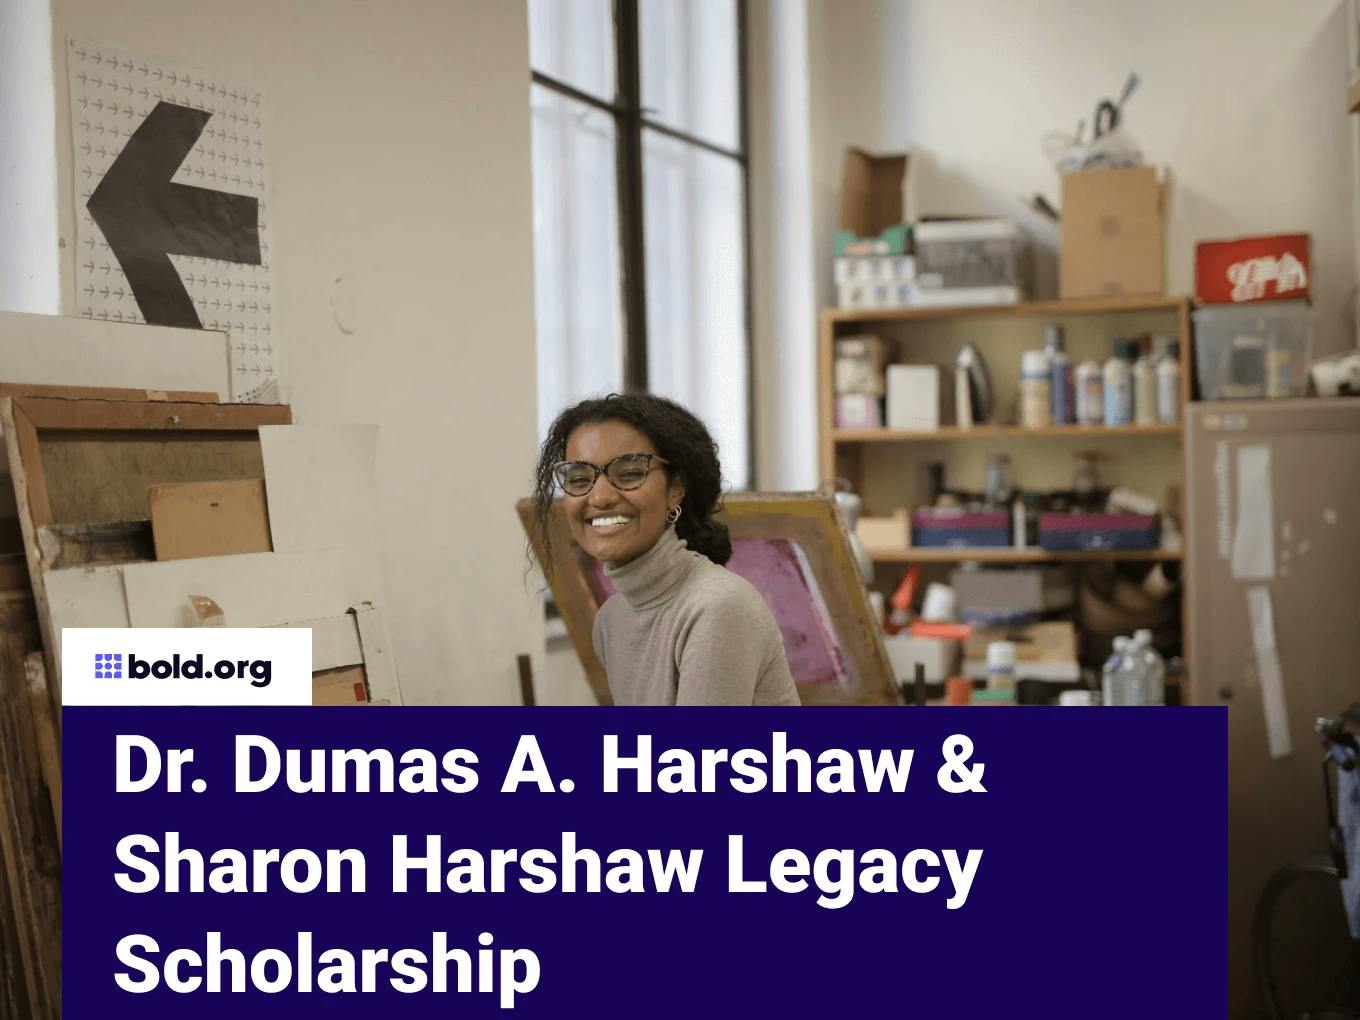 Dr. Dumas A. Harshaw & Sharon Harshaw Legacy Scholarship